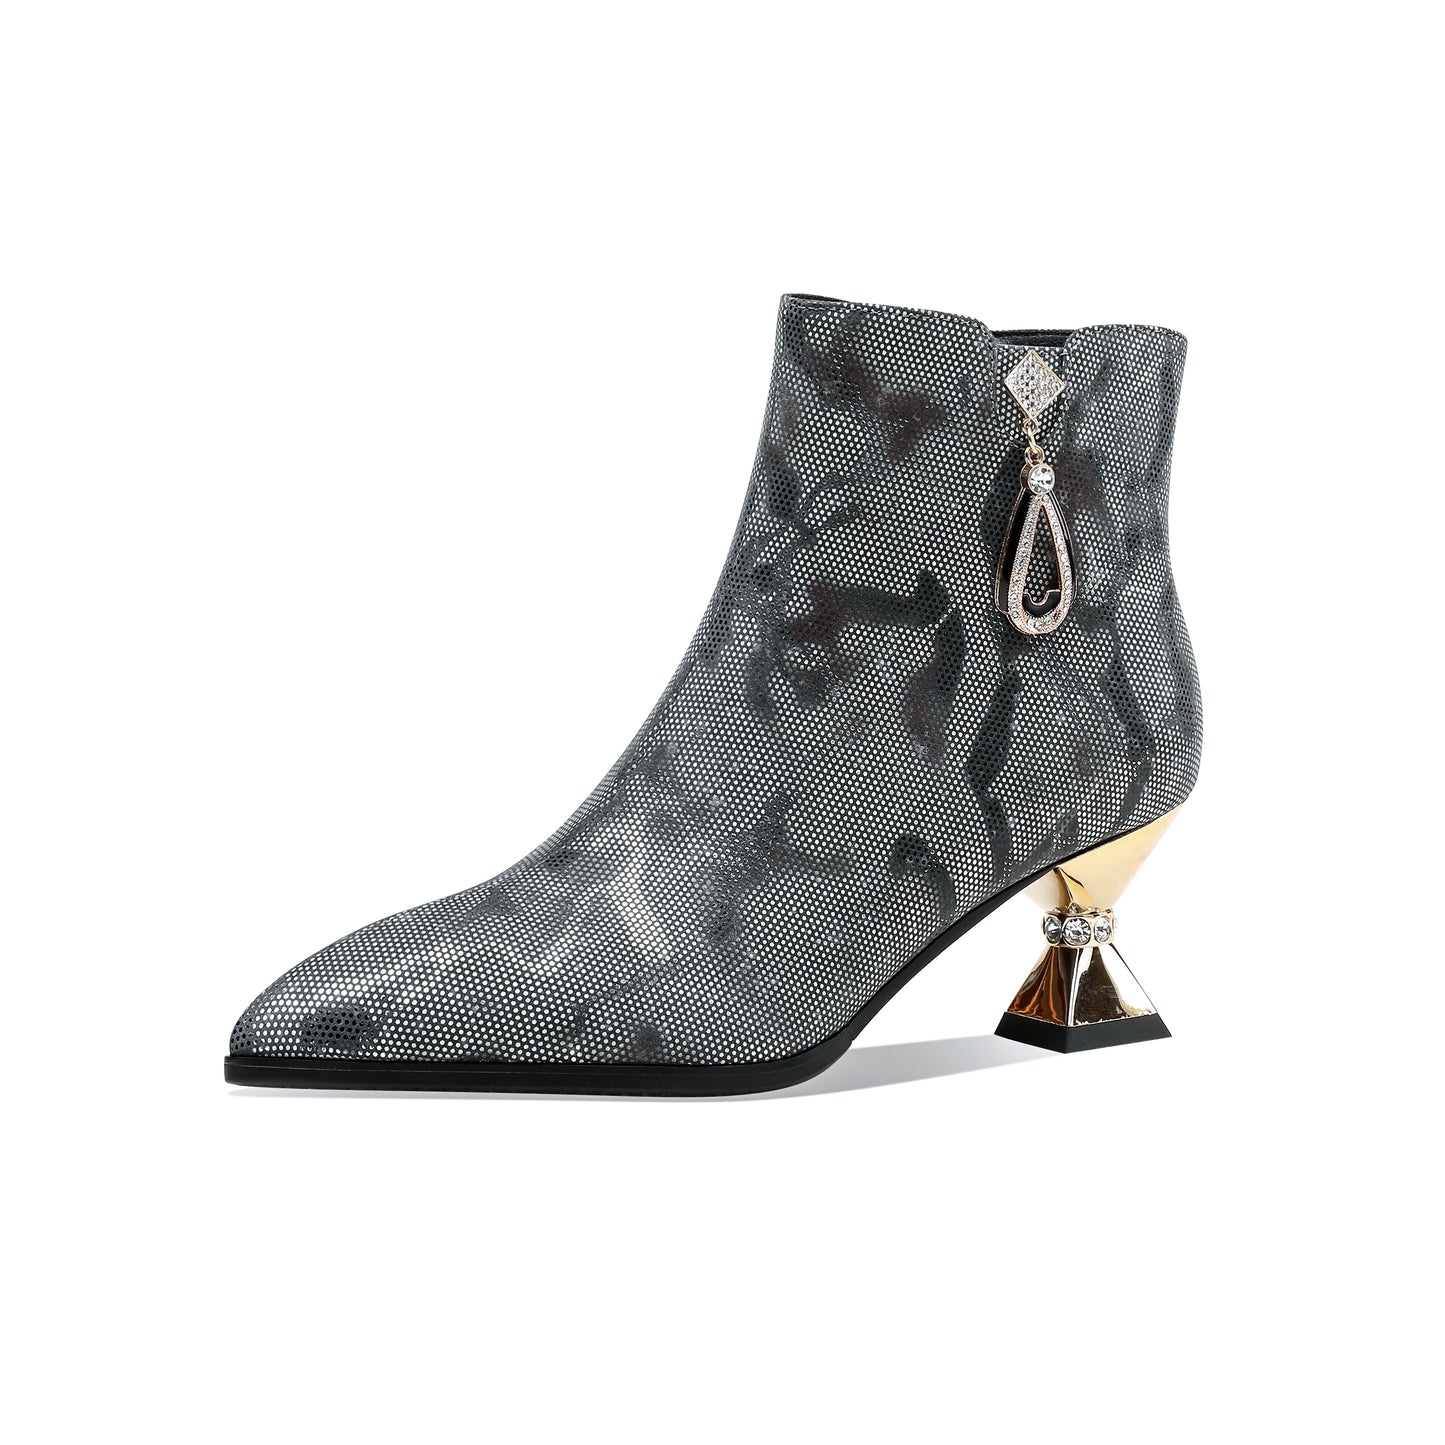 TinaCus Handmade Women's Assorted Color Genuine Leather Rhinestones Printed Snakeskin Side Zipper Pointed Toe Mid Spool Heel Ankle Boots